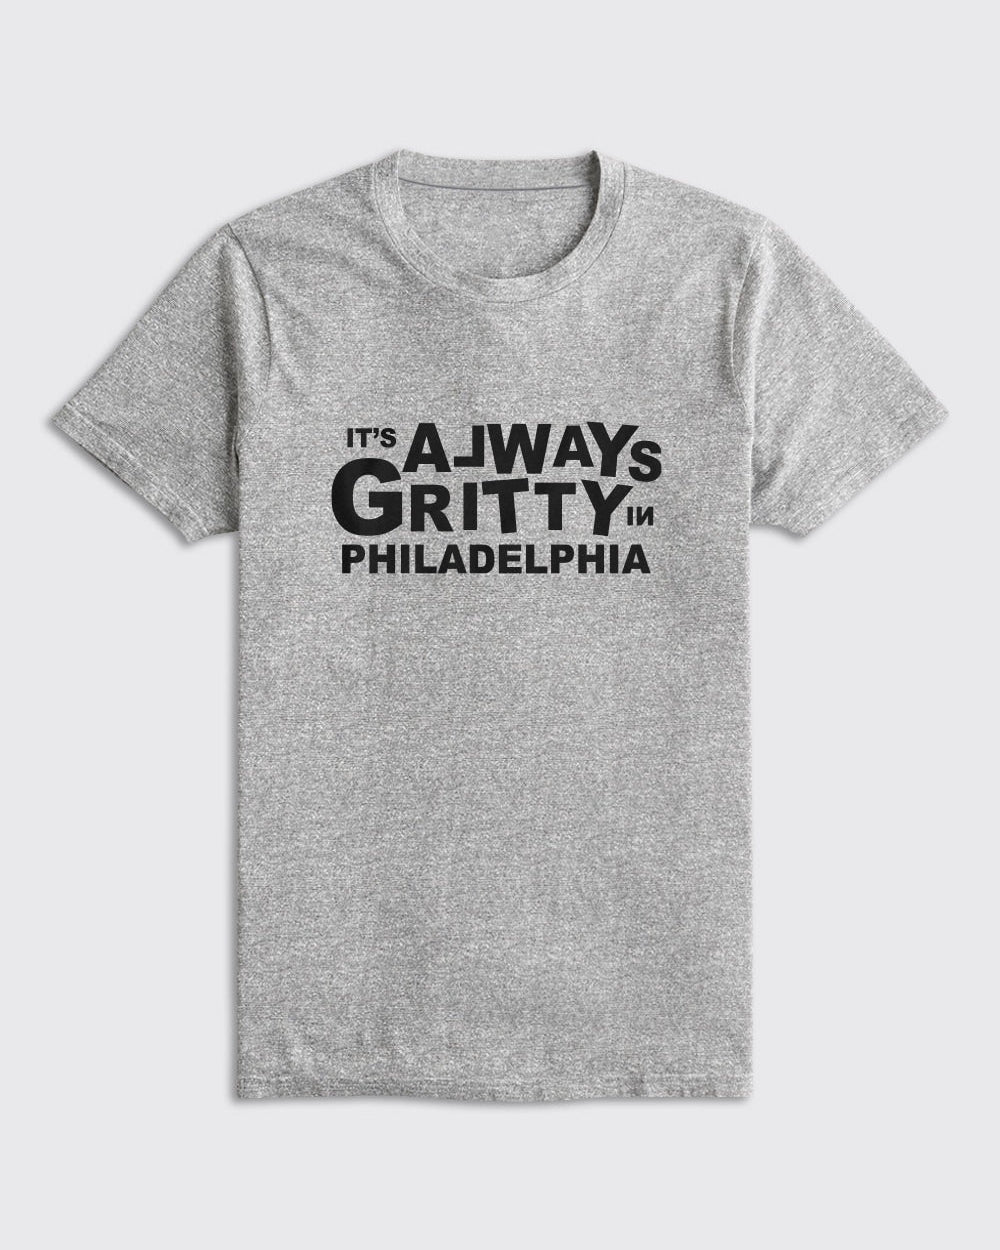 EMVPIID T-Shirt | Philadelphia 76ers Sixers Joel Embiid Inspired | phillygoat Athletic Heather / L